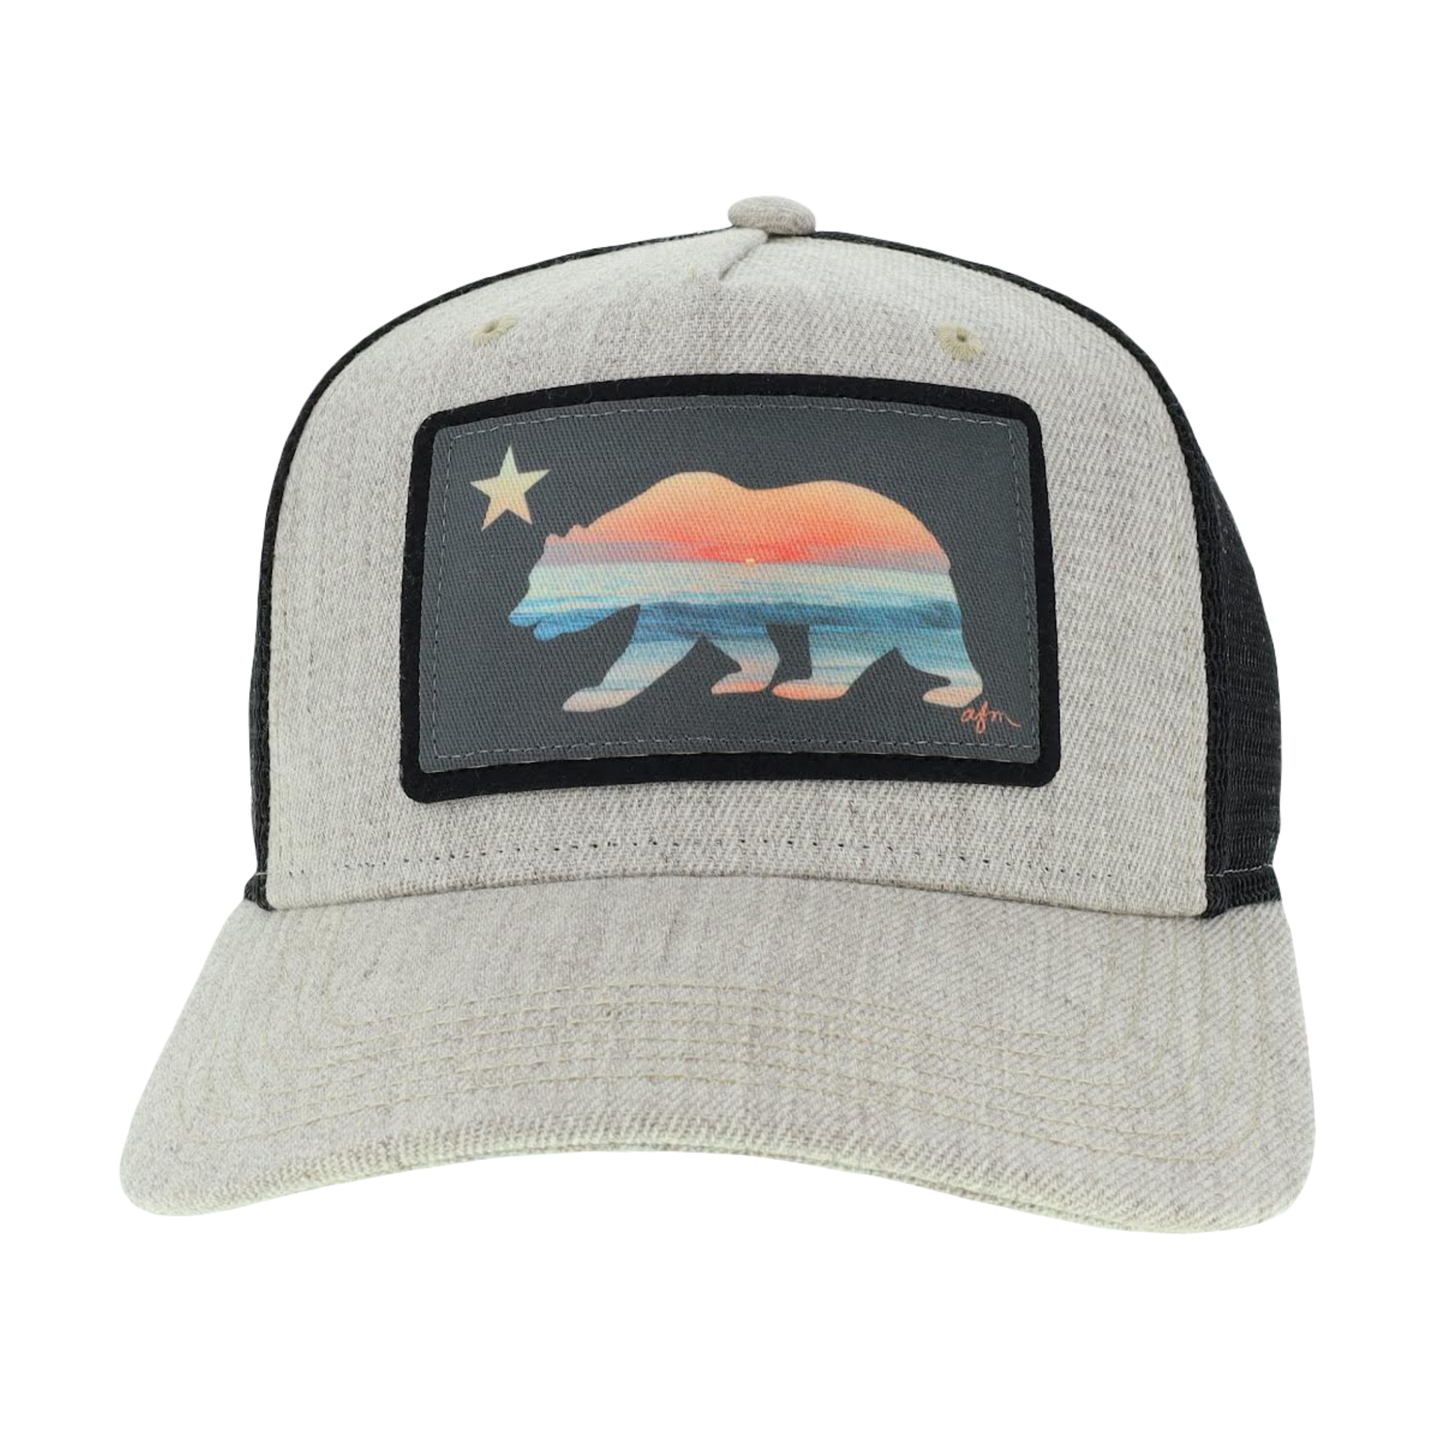 California Bear Roadie Trucker Hat in Heather Tan/Black